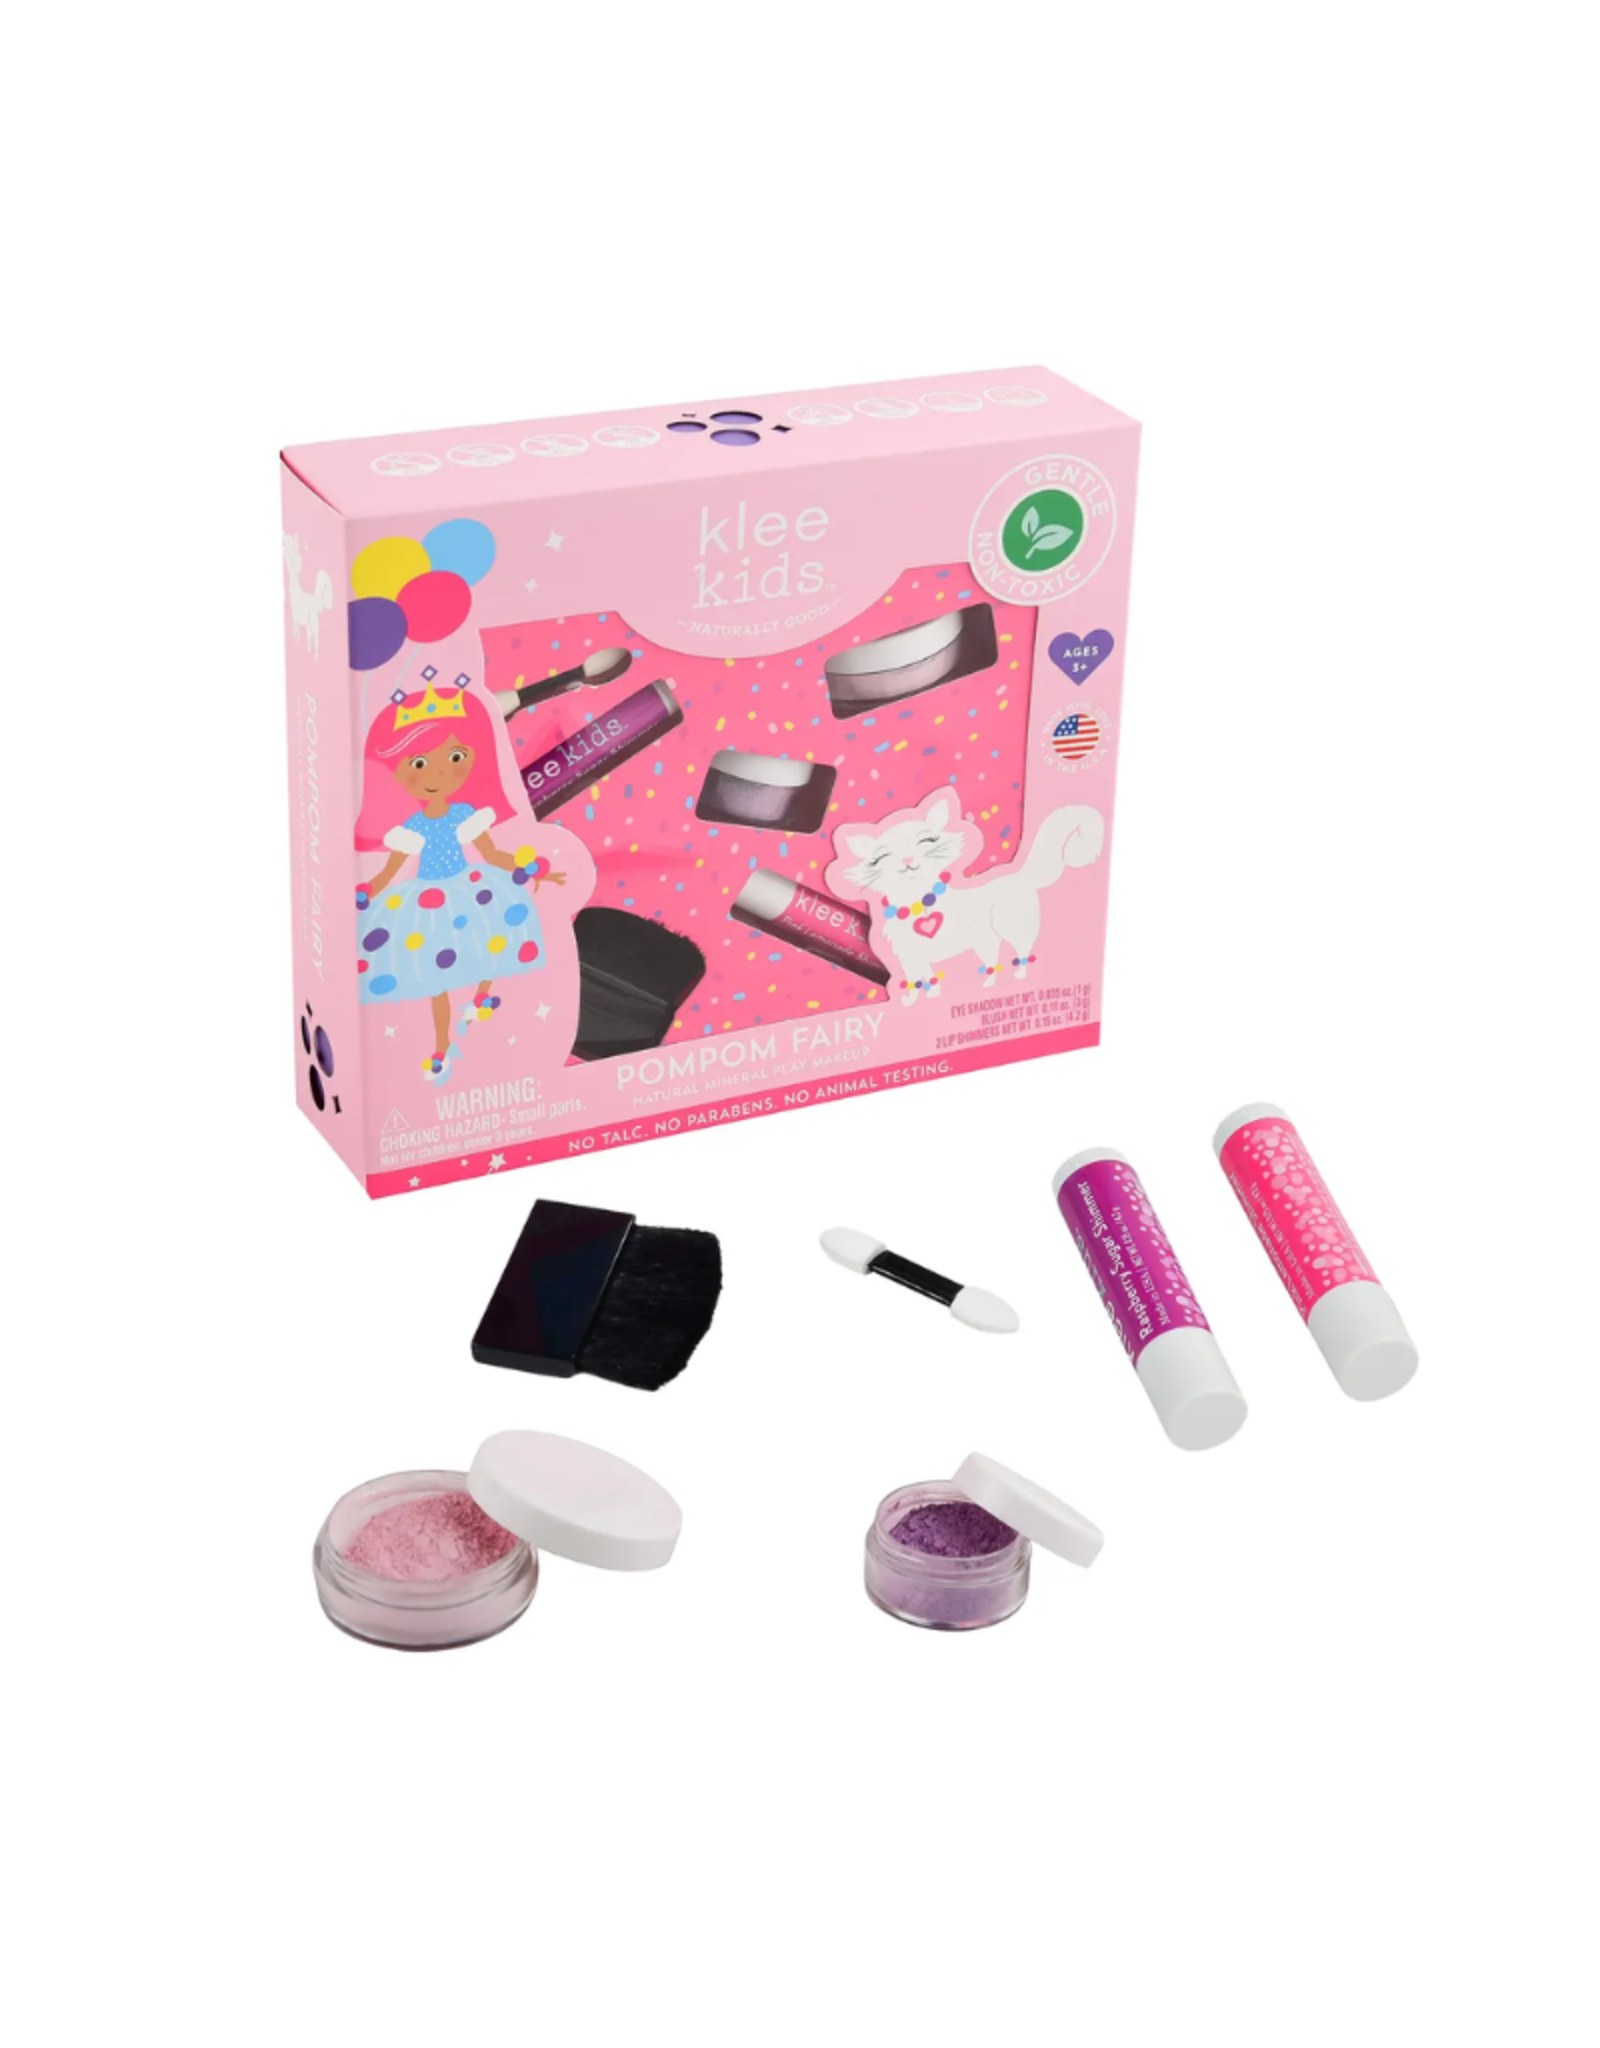 Klee Pom Pom Fairy - Klee Kids Natural Mineral Play Makeup Kit